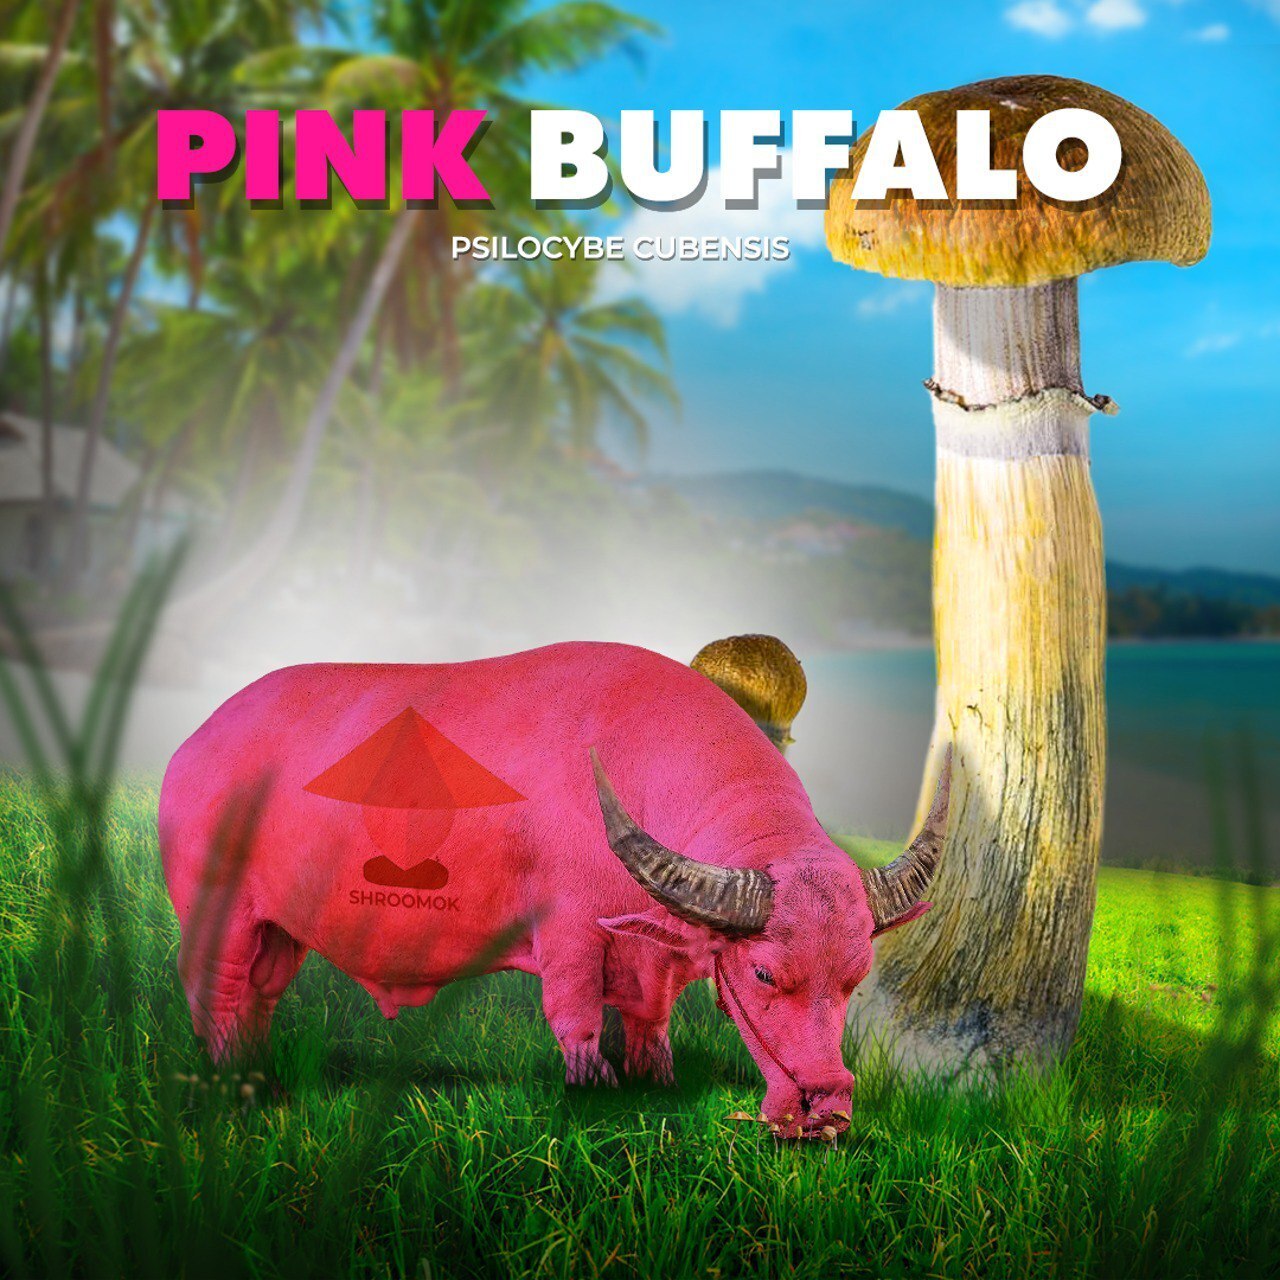 https://shroomok.com/en/wiki/images/3/30/Psilocybe-cubensis-pink-buffalo-mushrooms.jpg